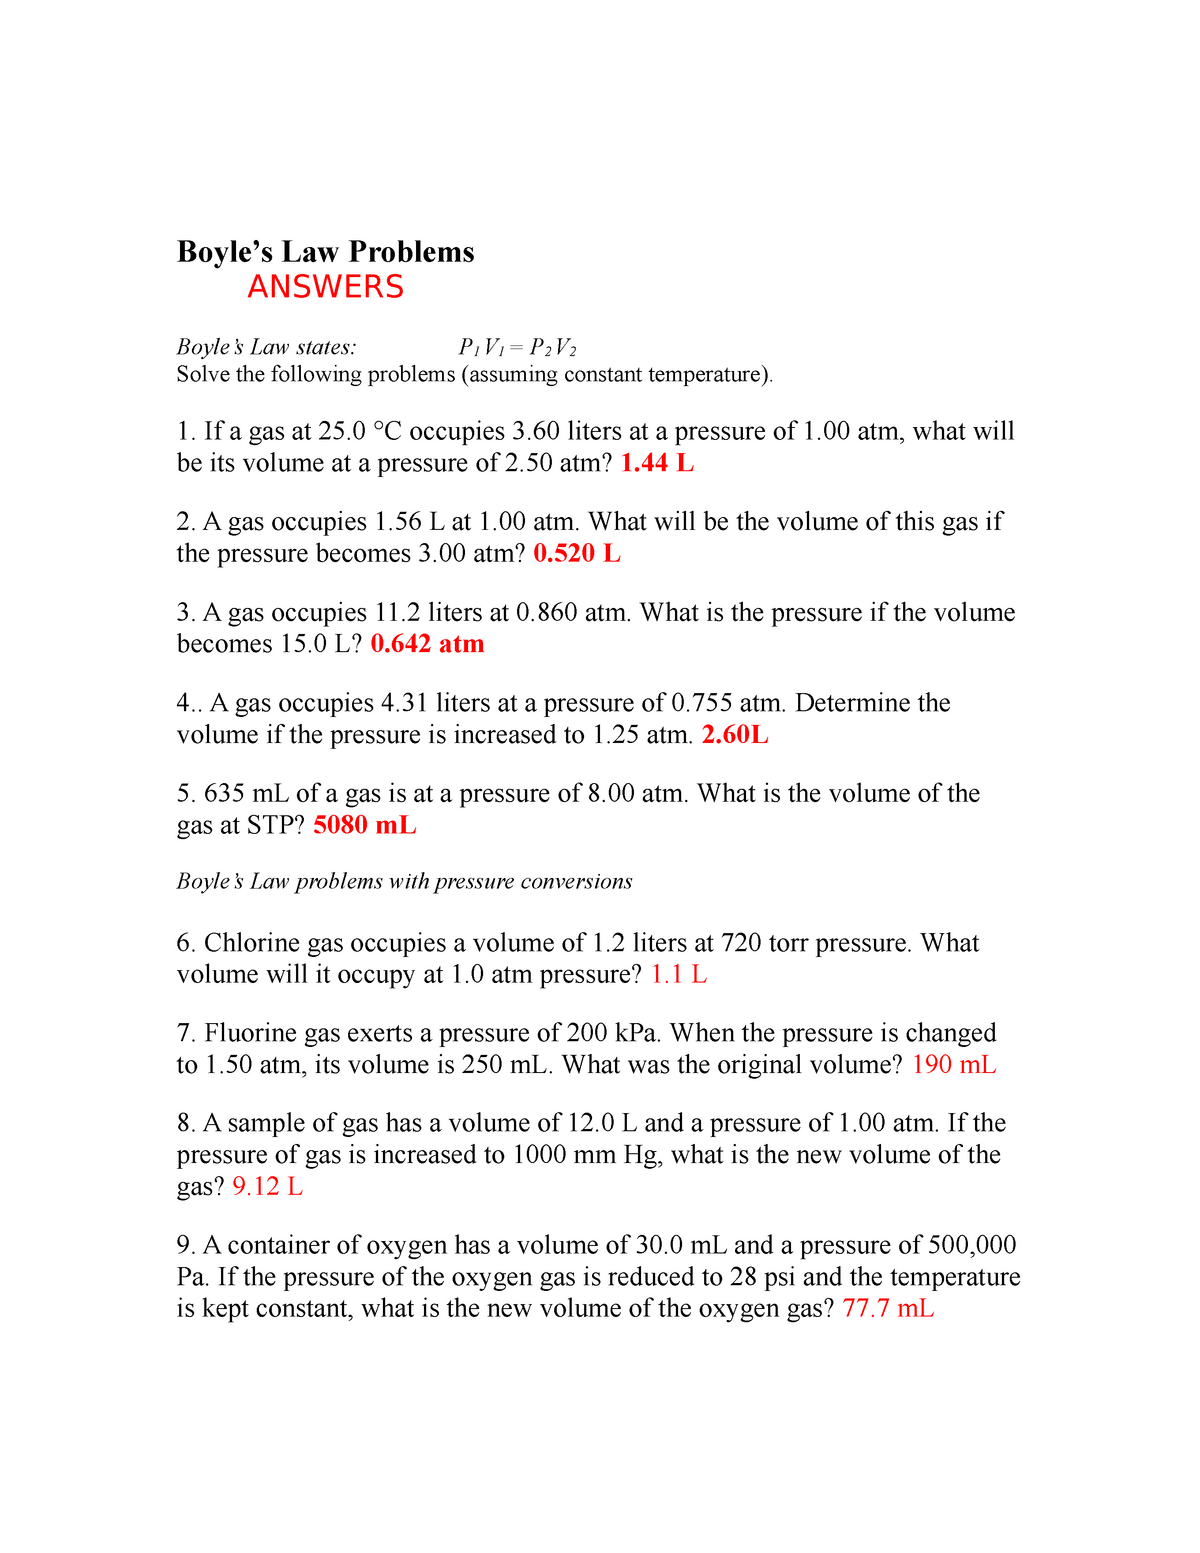 activity 2 problem solving using boyle's law